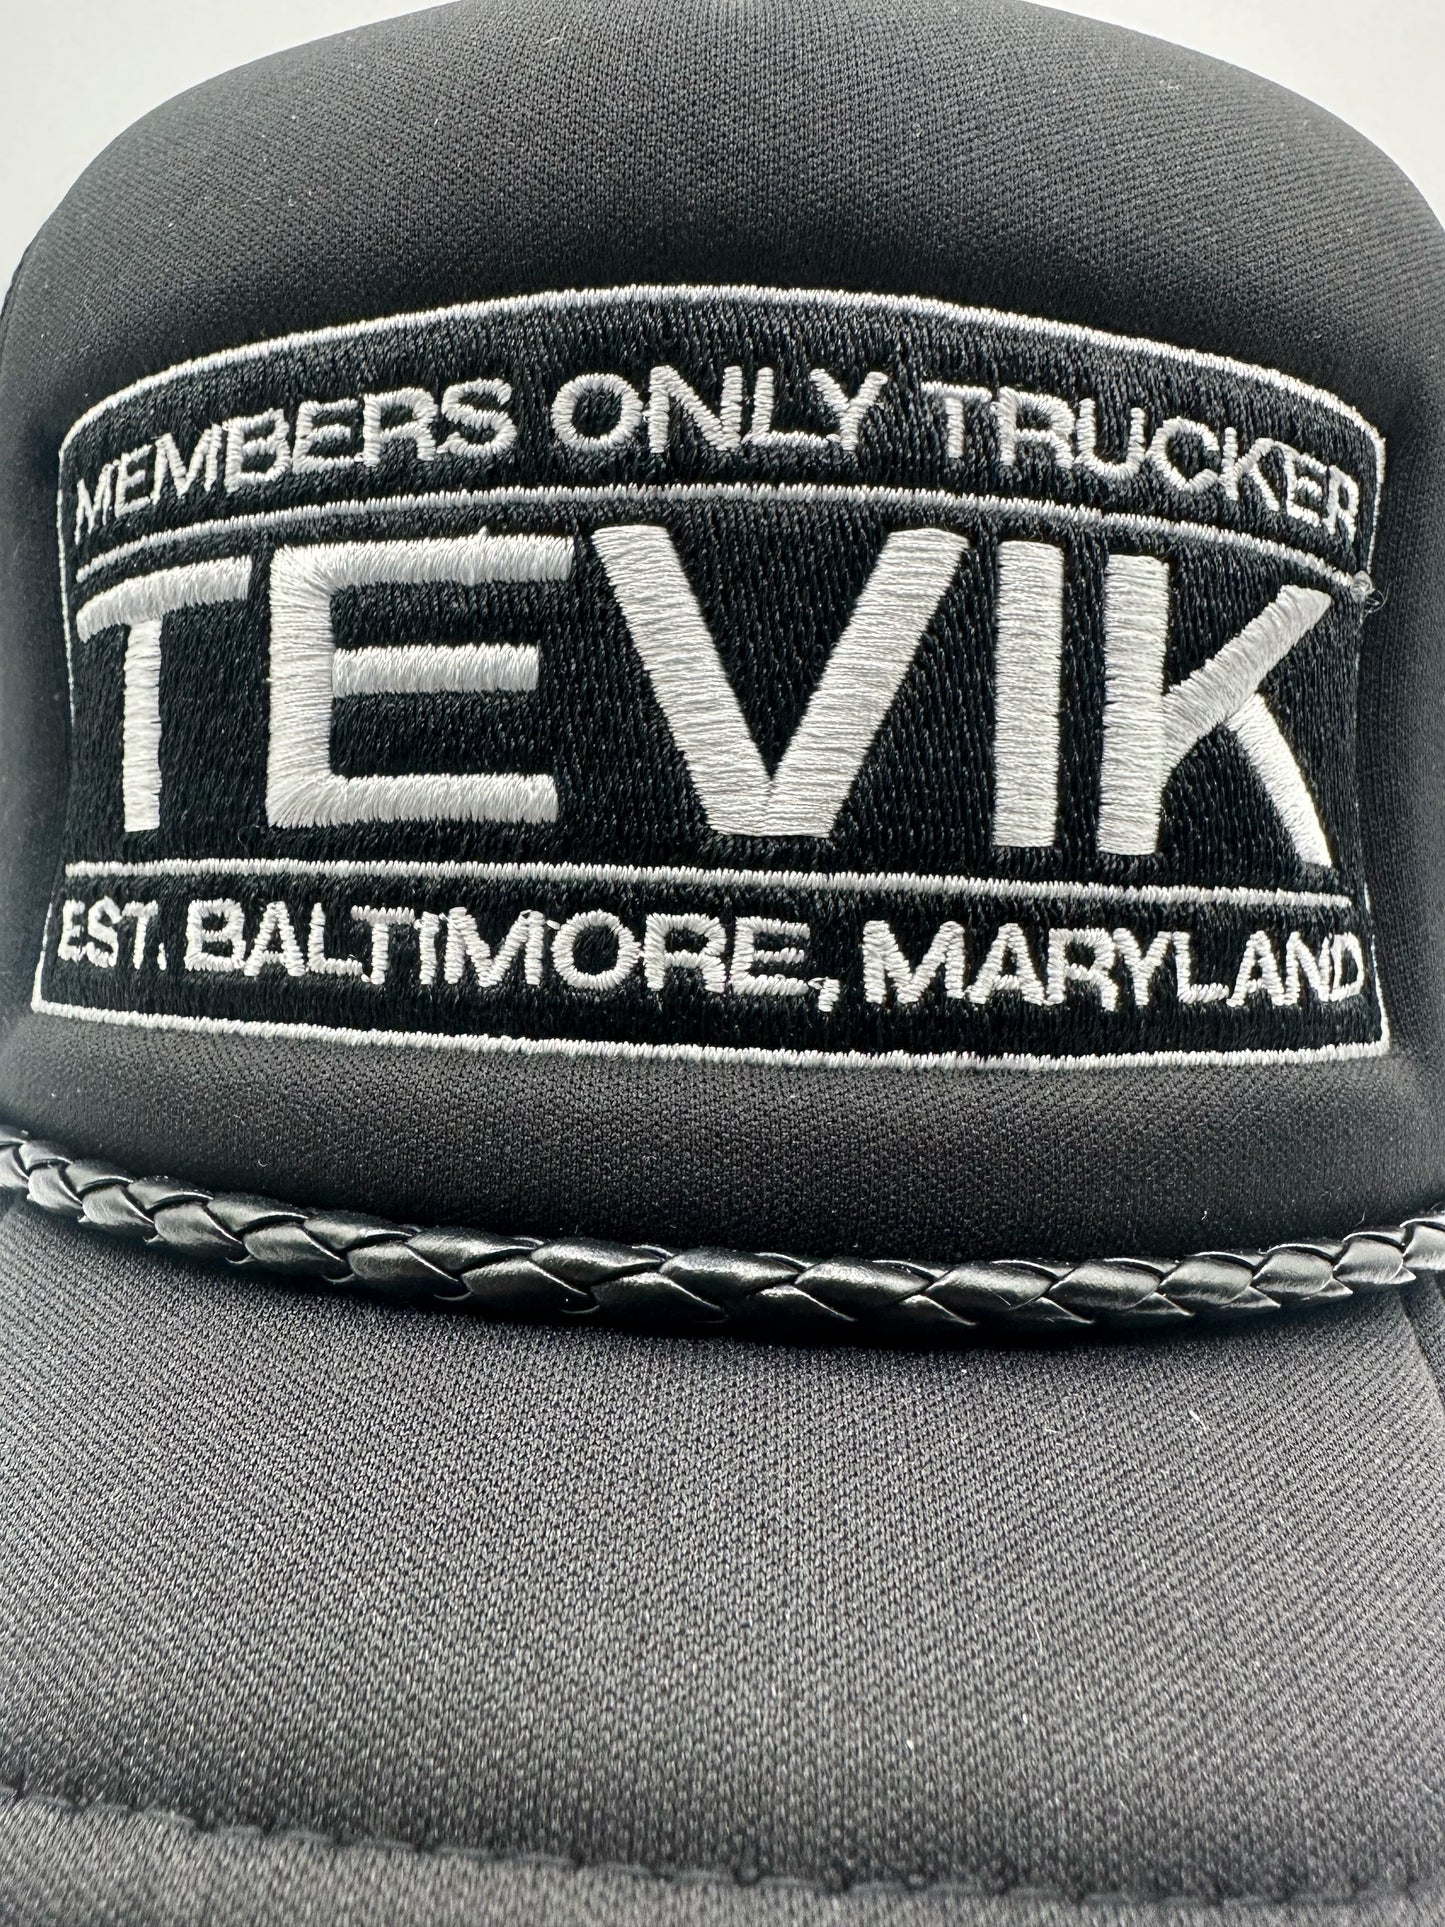 BLACK TRUCKER HAT